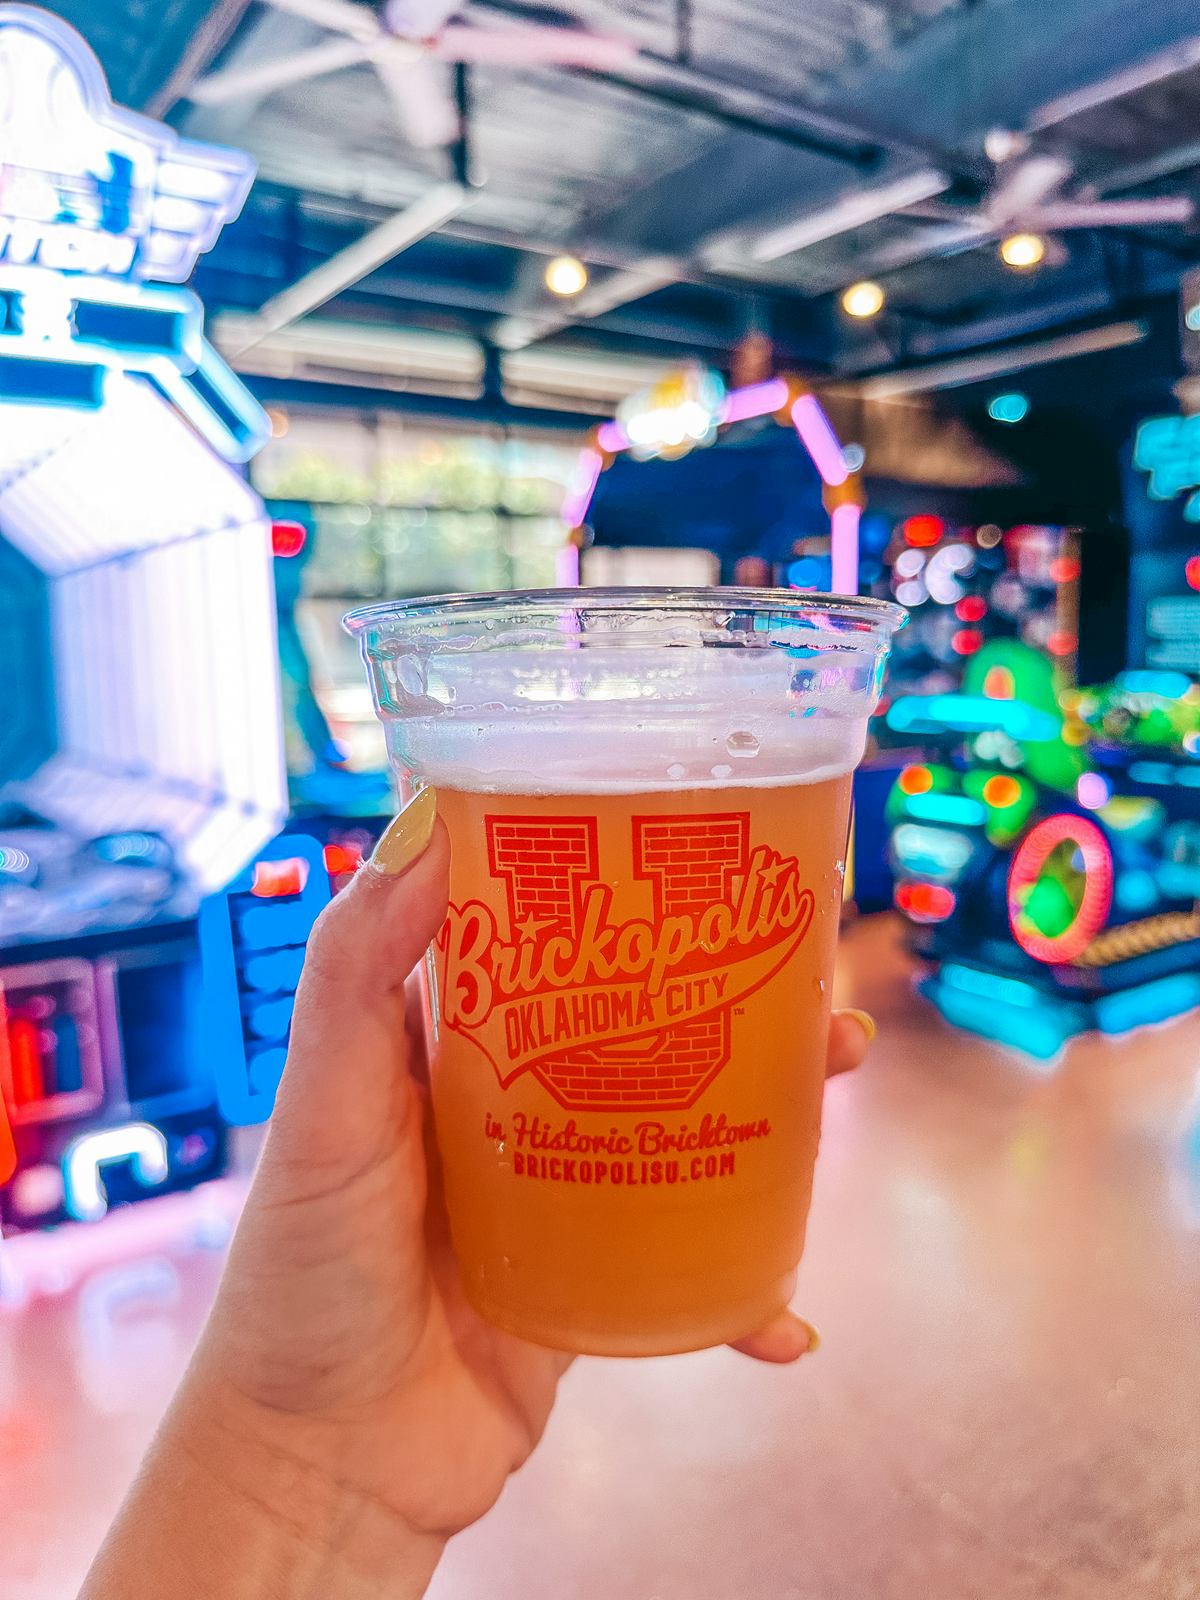 Beer and games at Brickopolis Entertainment in Oklahoma City